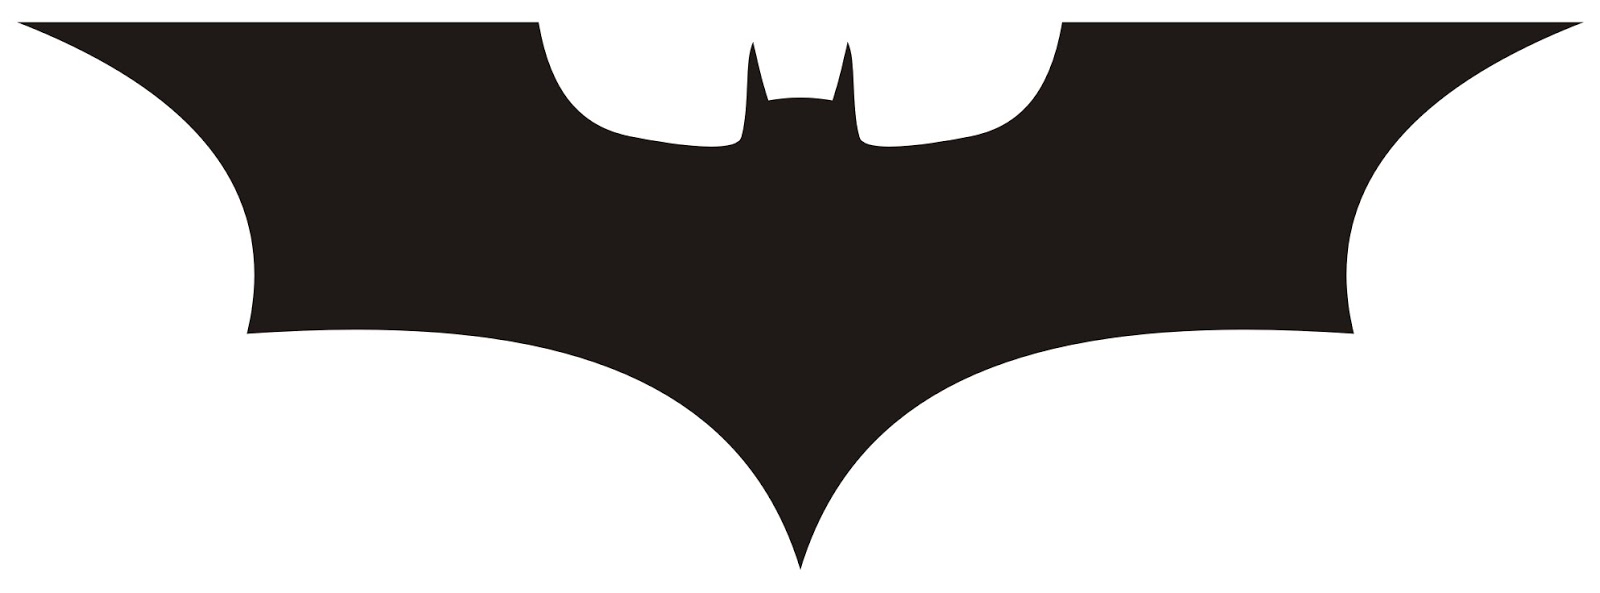 Batman Logo Images - Free Download and Printable